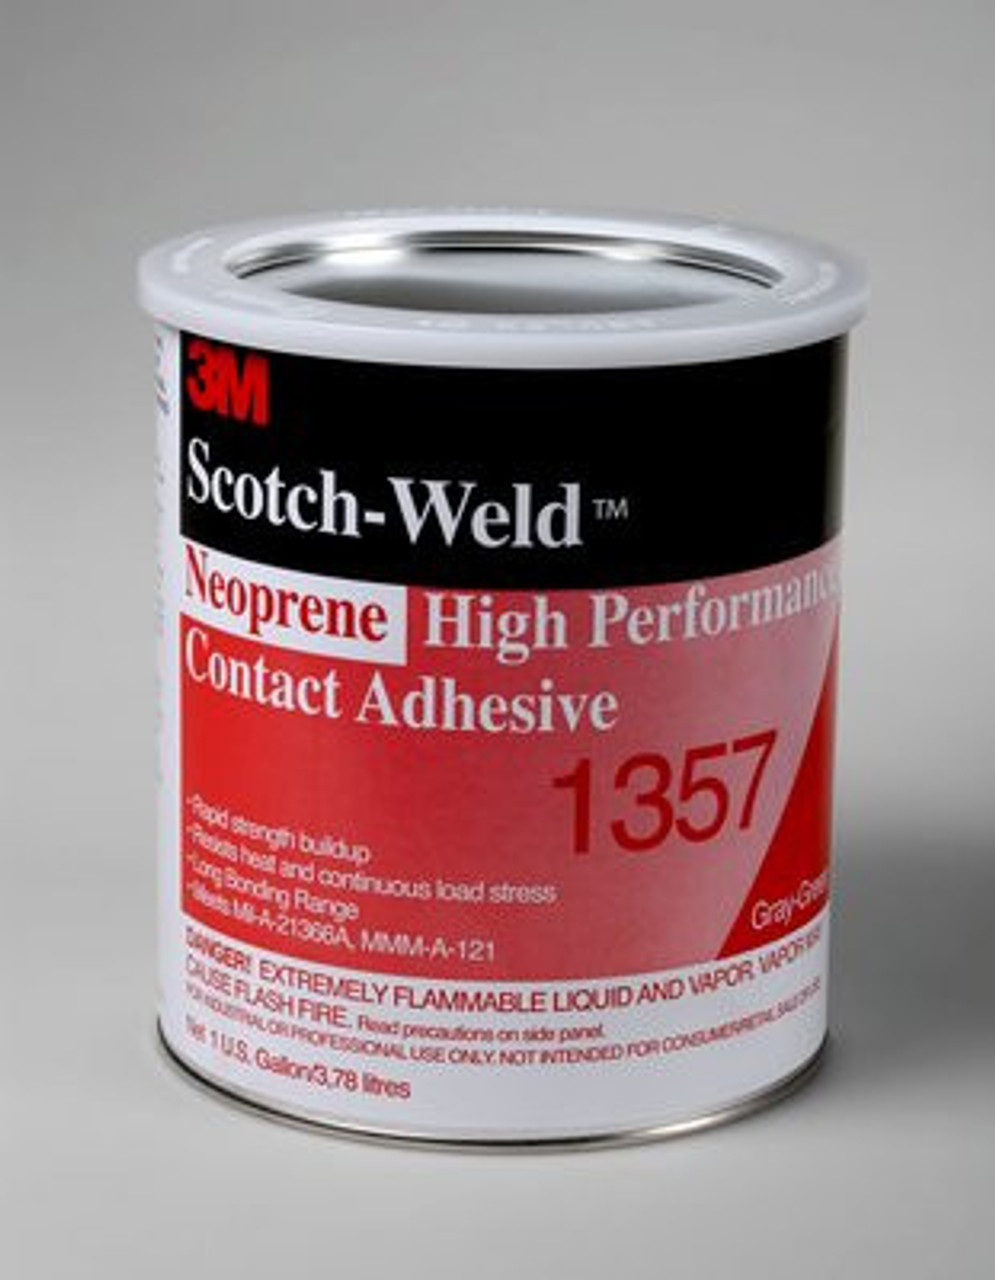 3M™ Neoprene High Performance Contact Adhesive 1357, Light Yellow, 1 Gallon Can